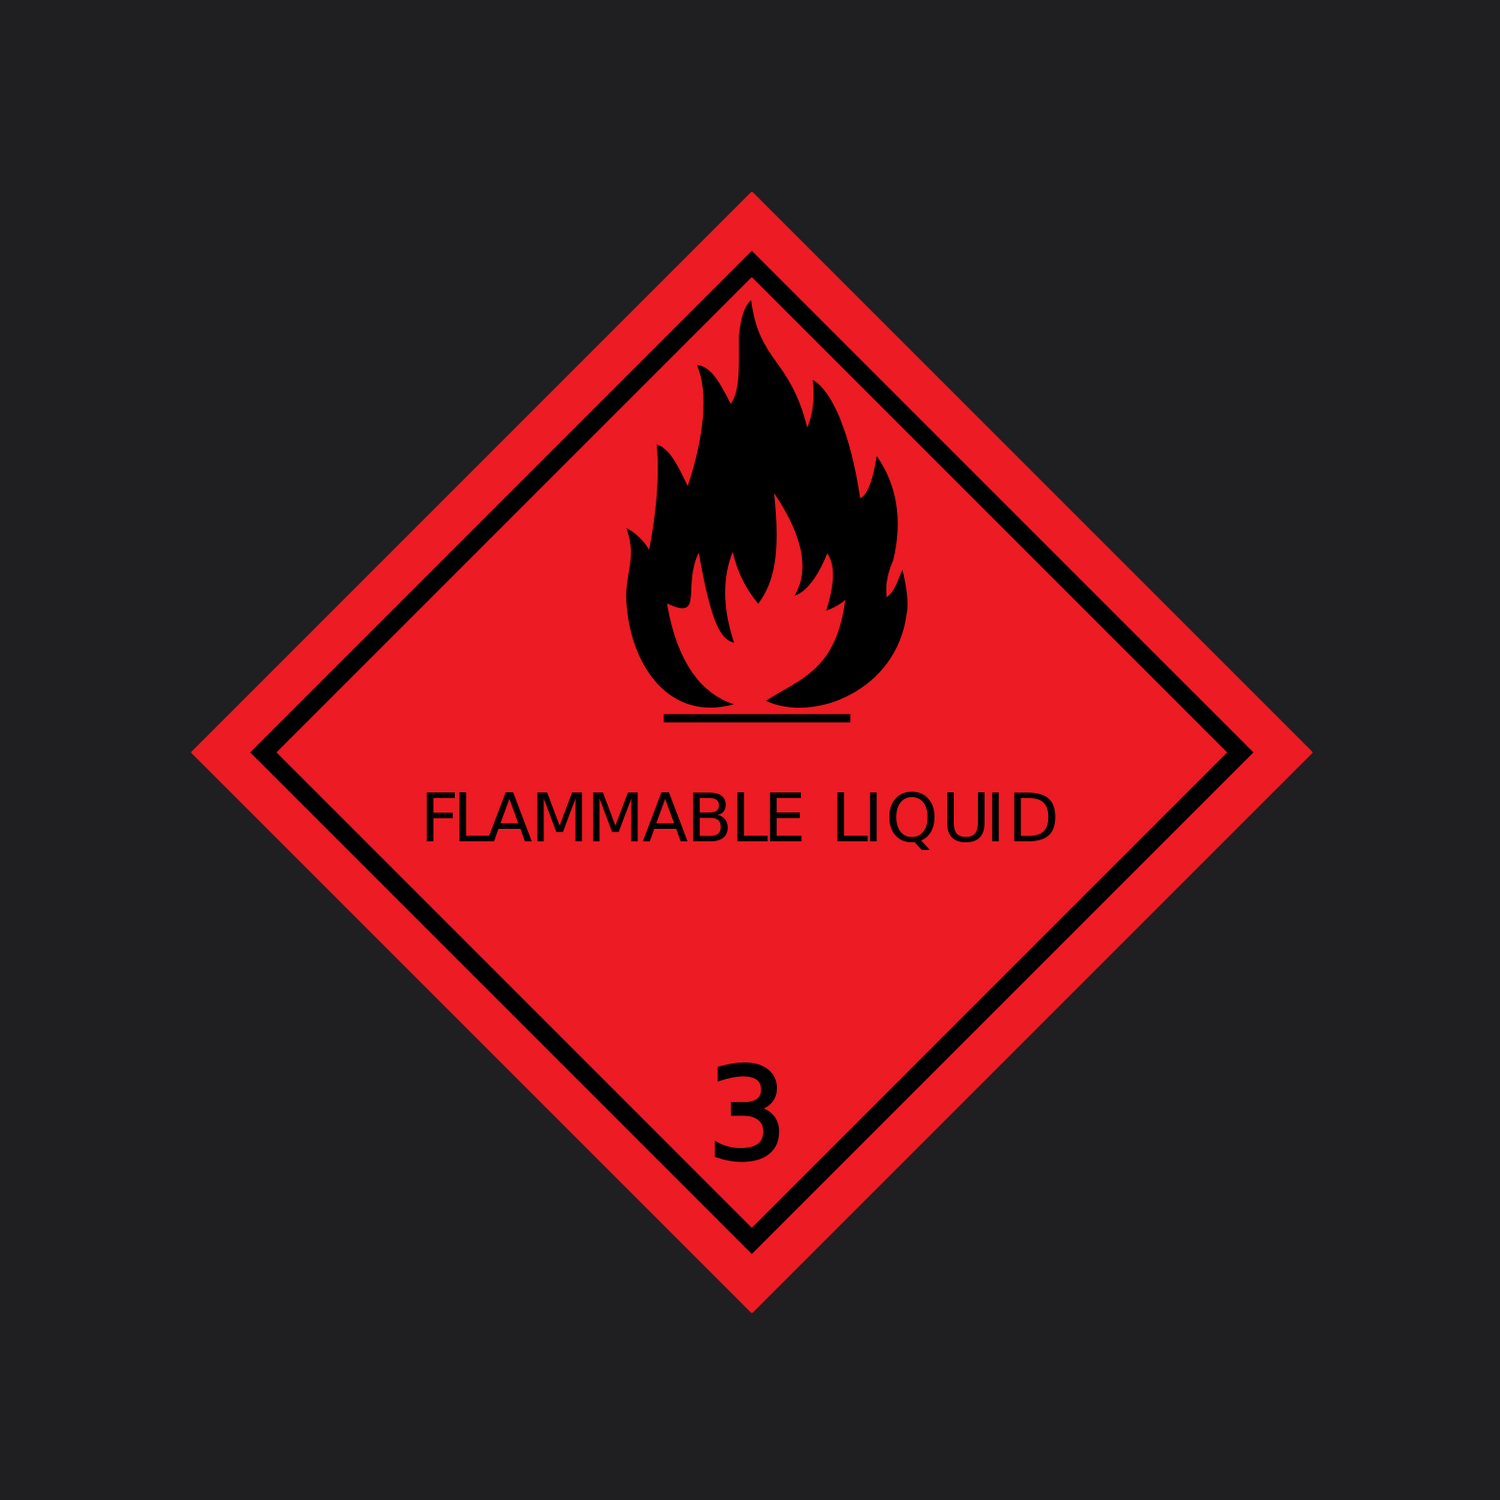 Flammable Liquid Sign